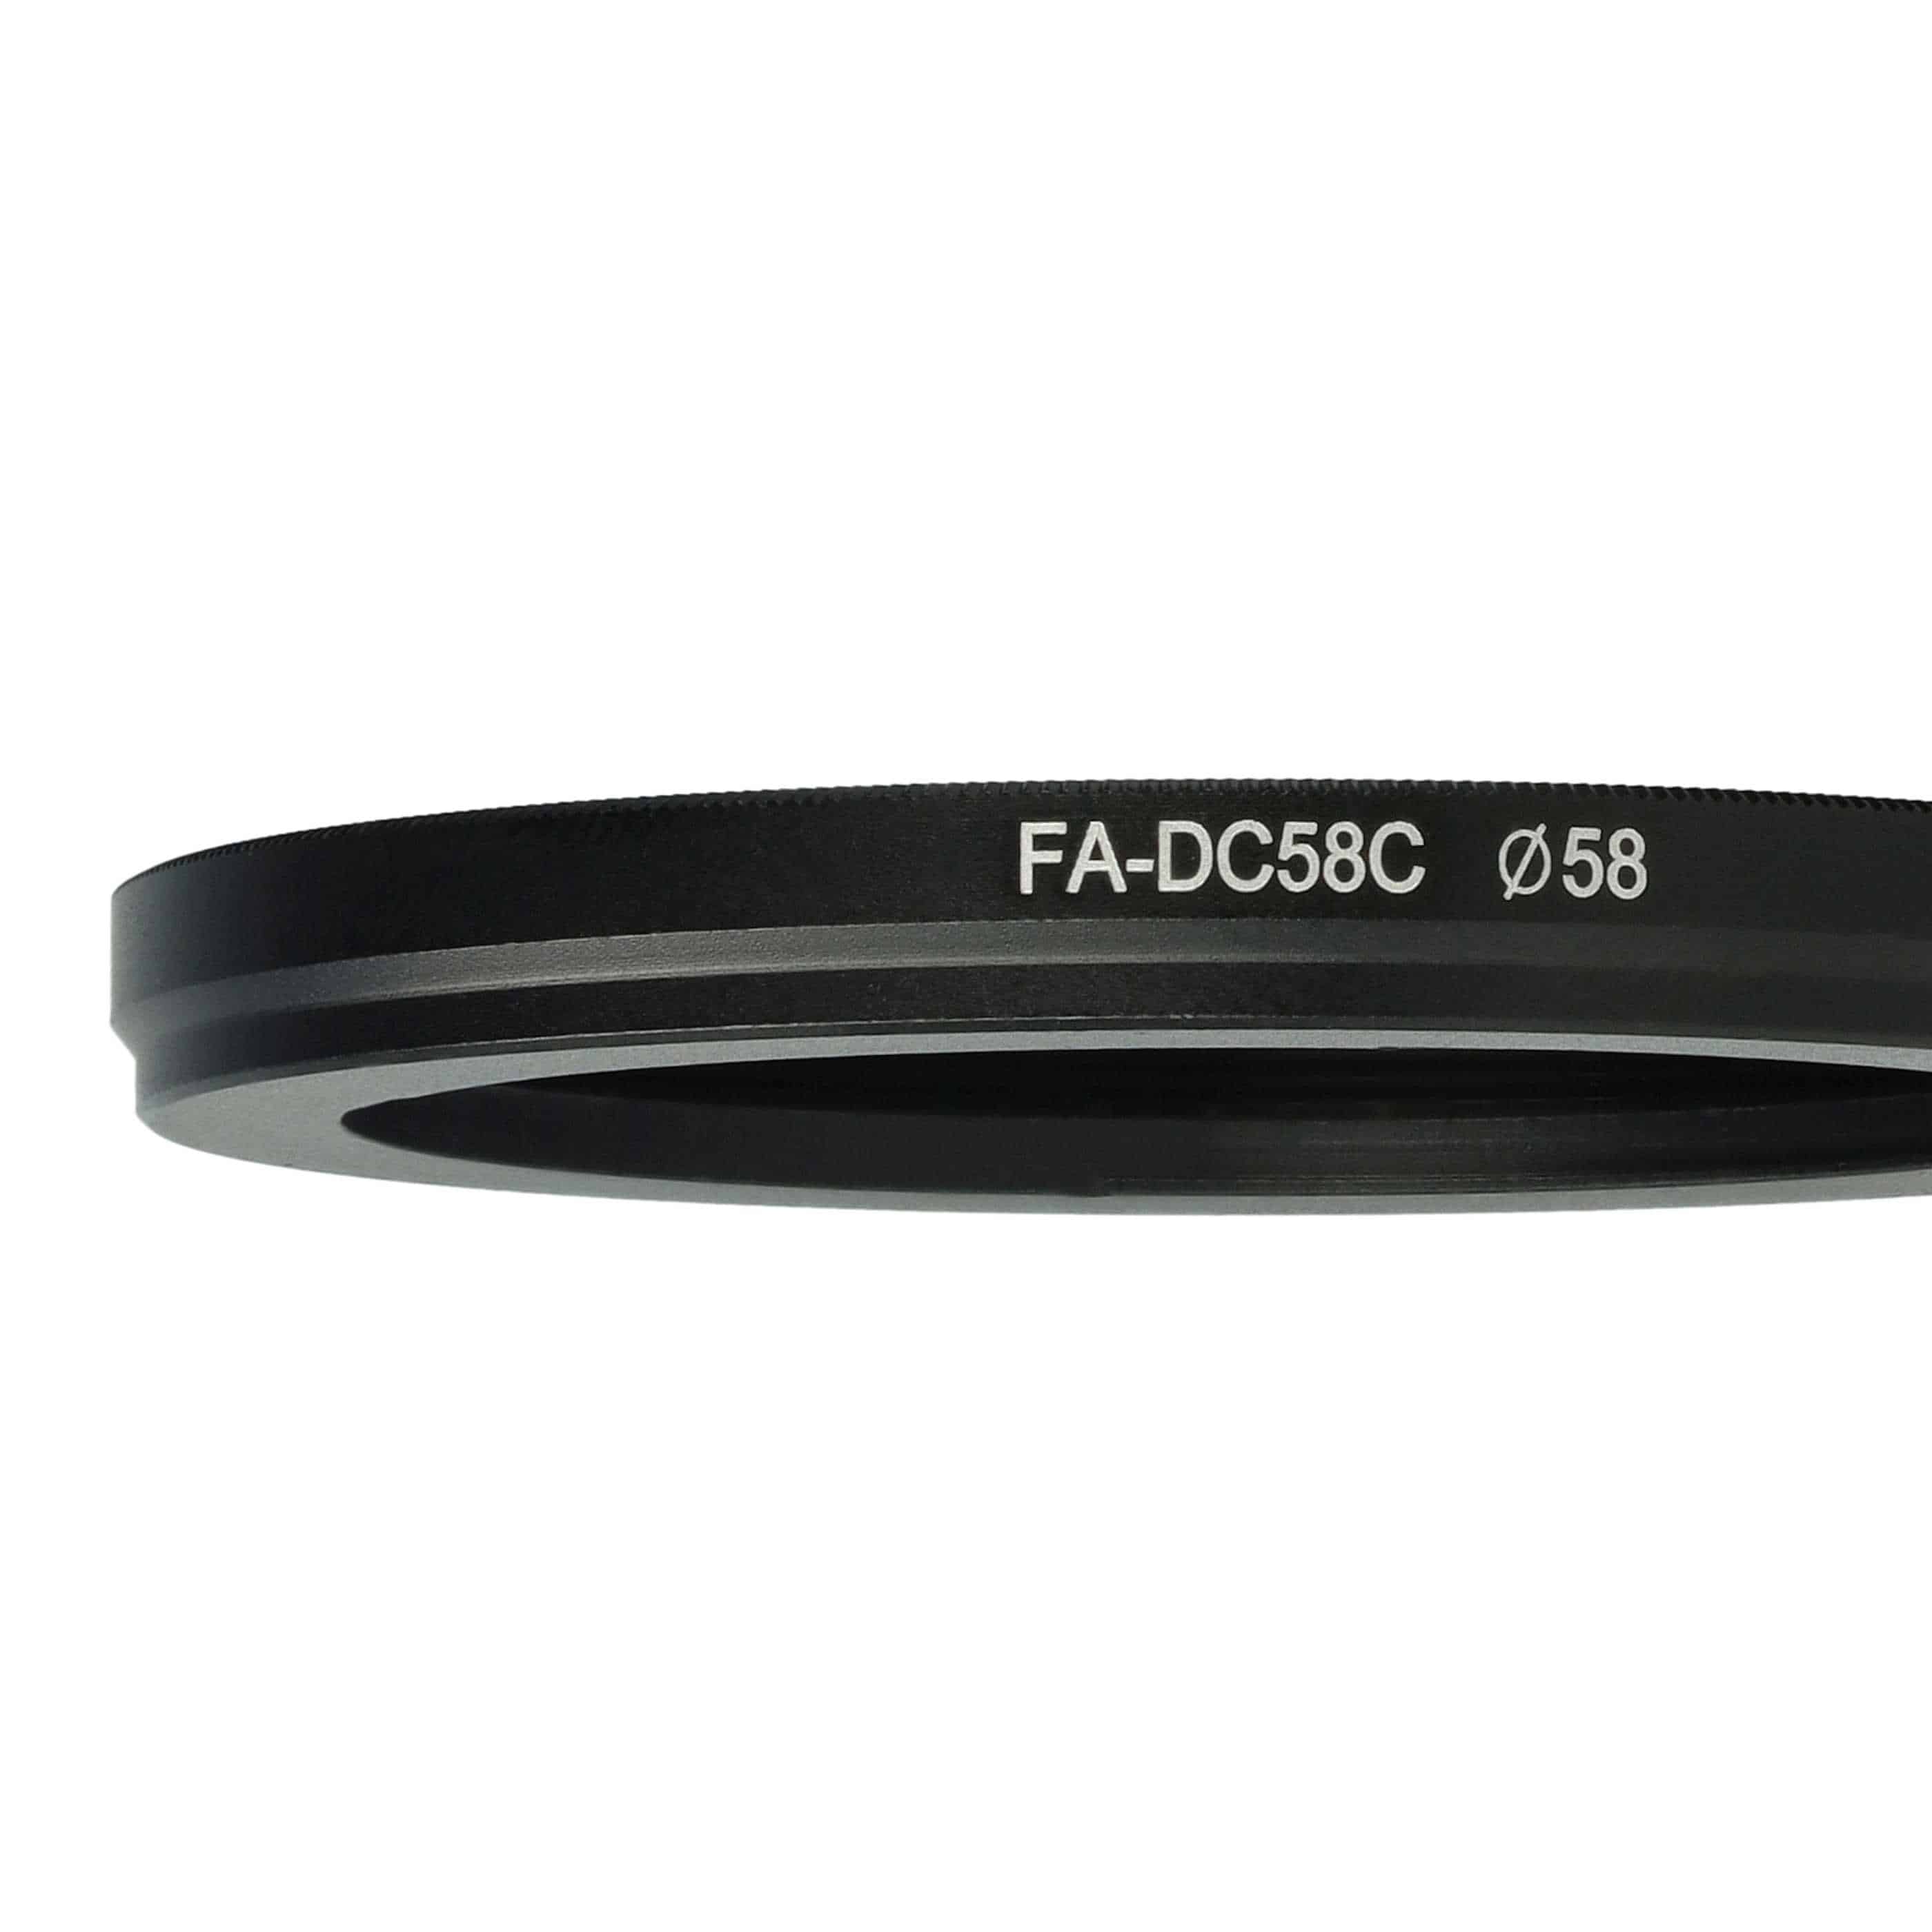 Filteradapter als Ersatz für Canon FA-DC58C Kamera Objektiv